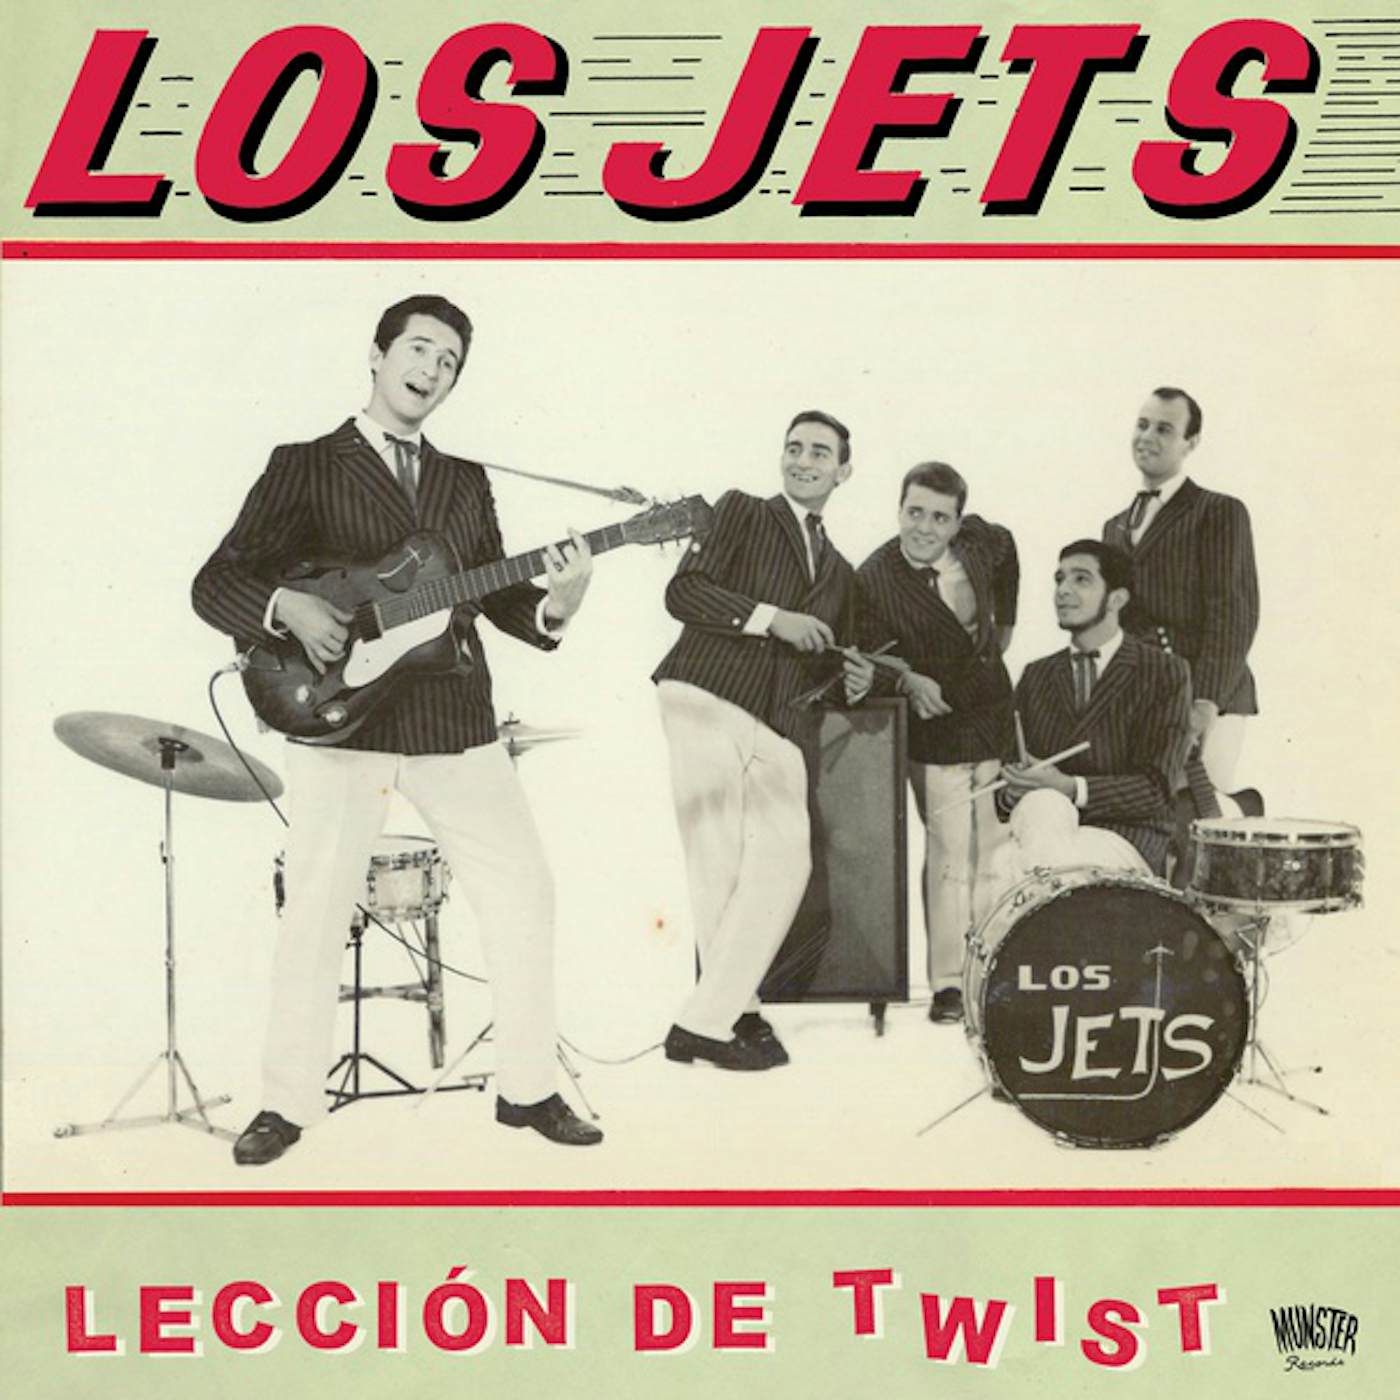 Jets LECCION DE TWIST Vinyl Record